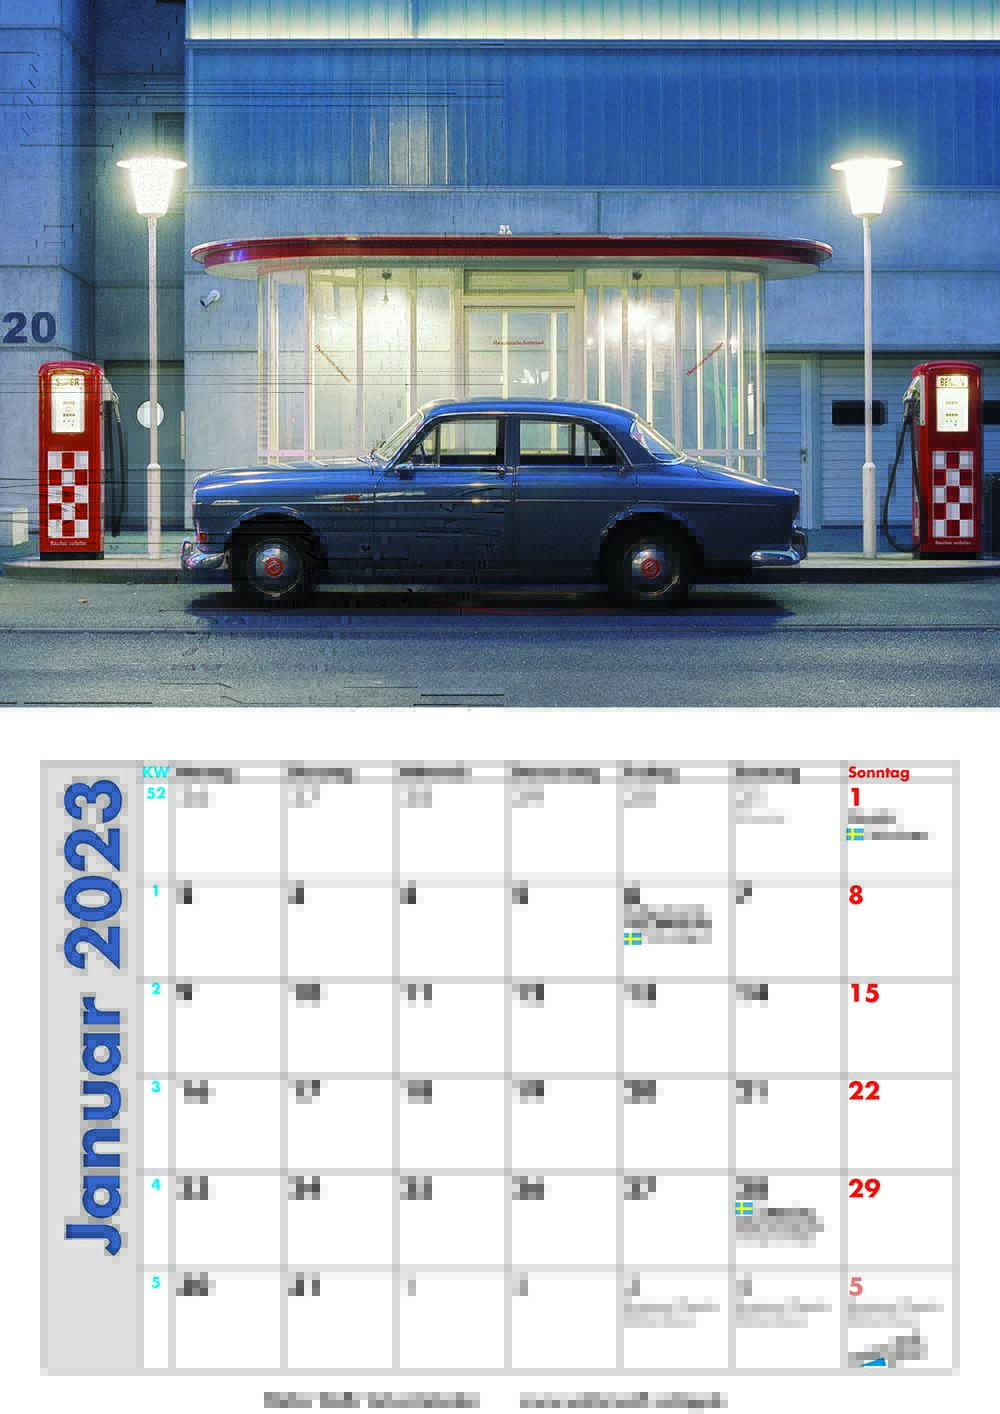 Volvo_Kalender_2018